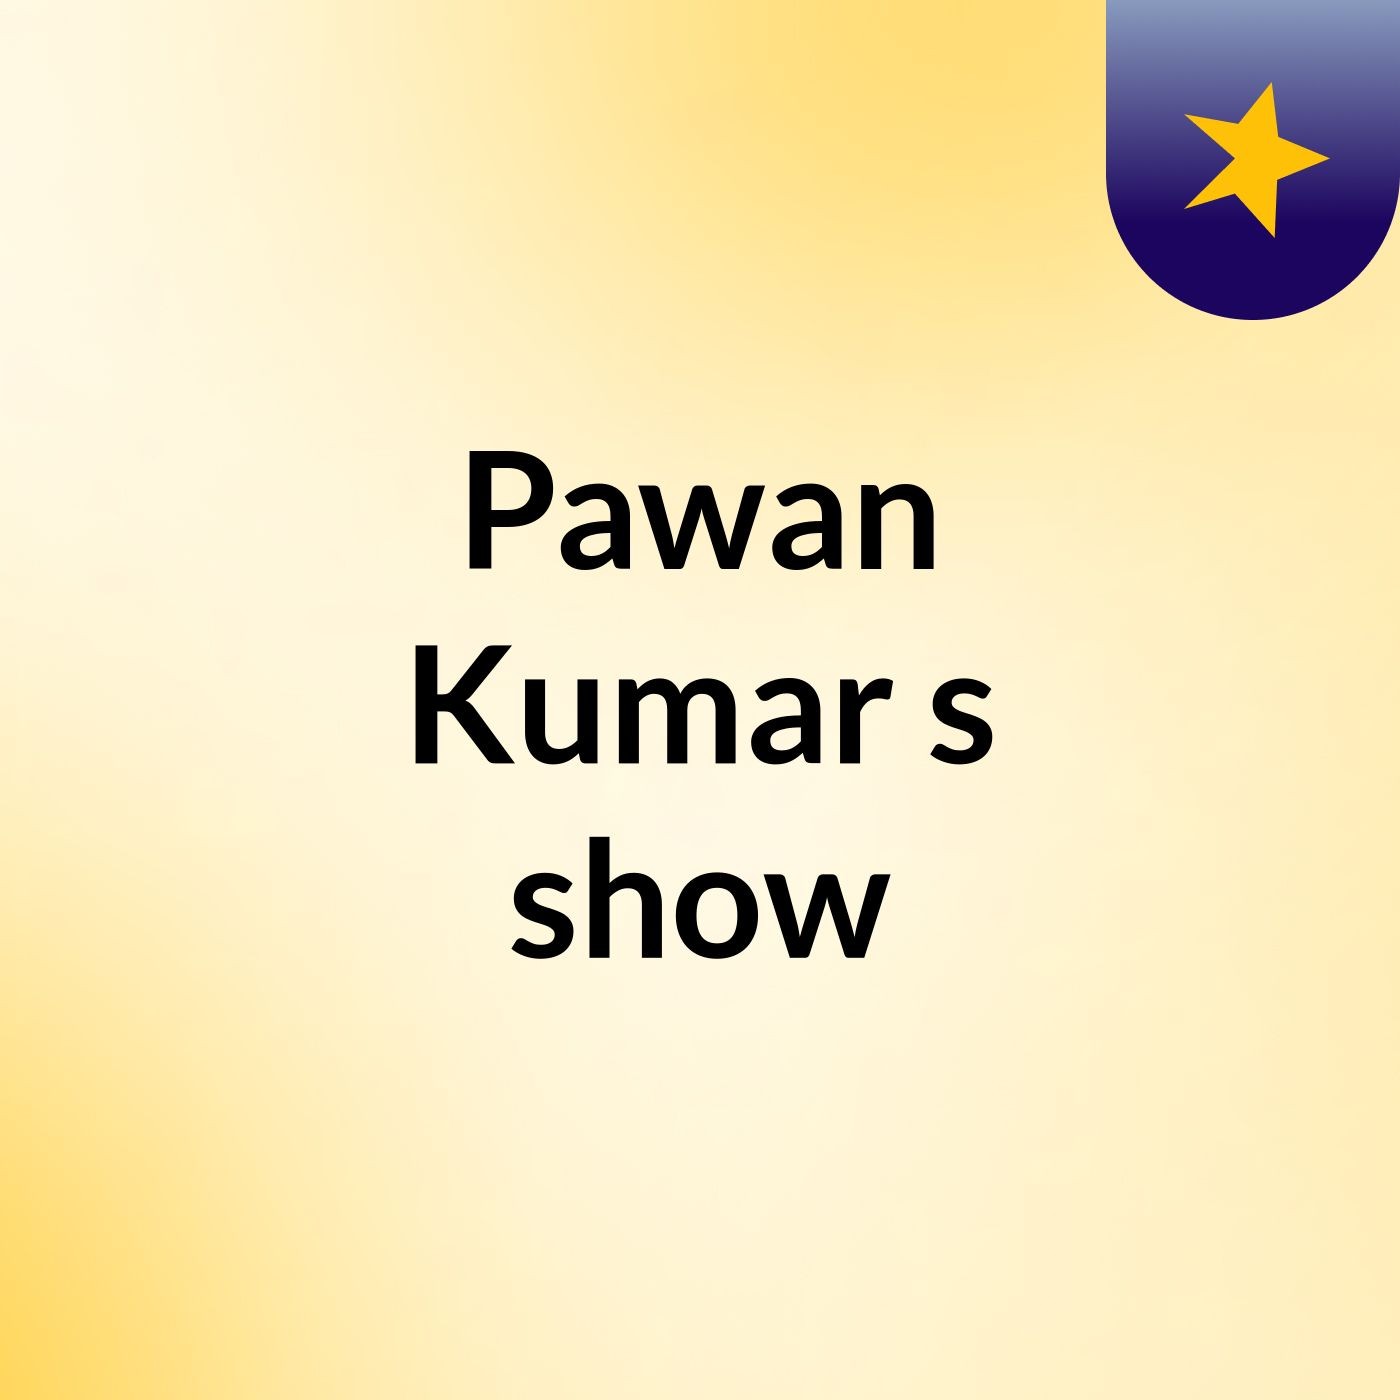 Pawan Kumar's show